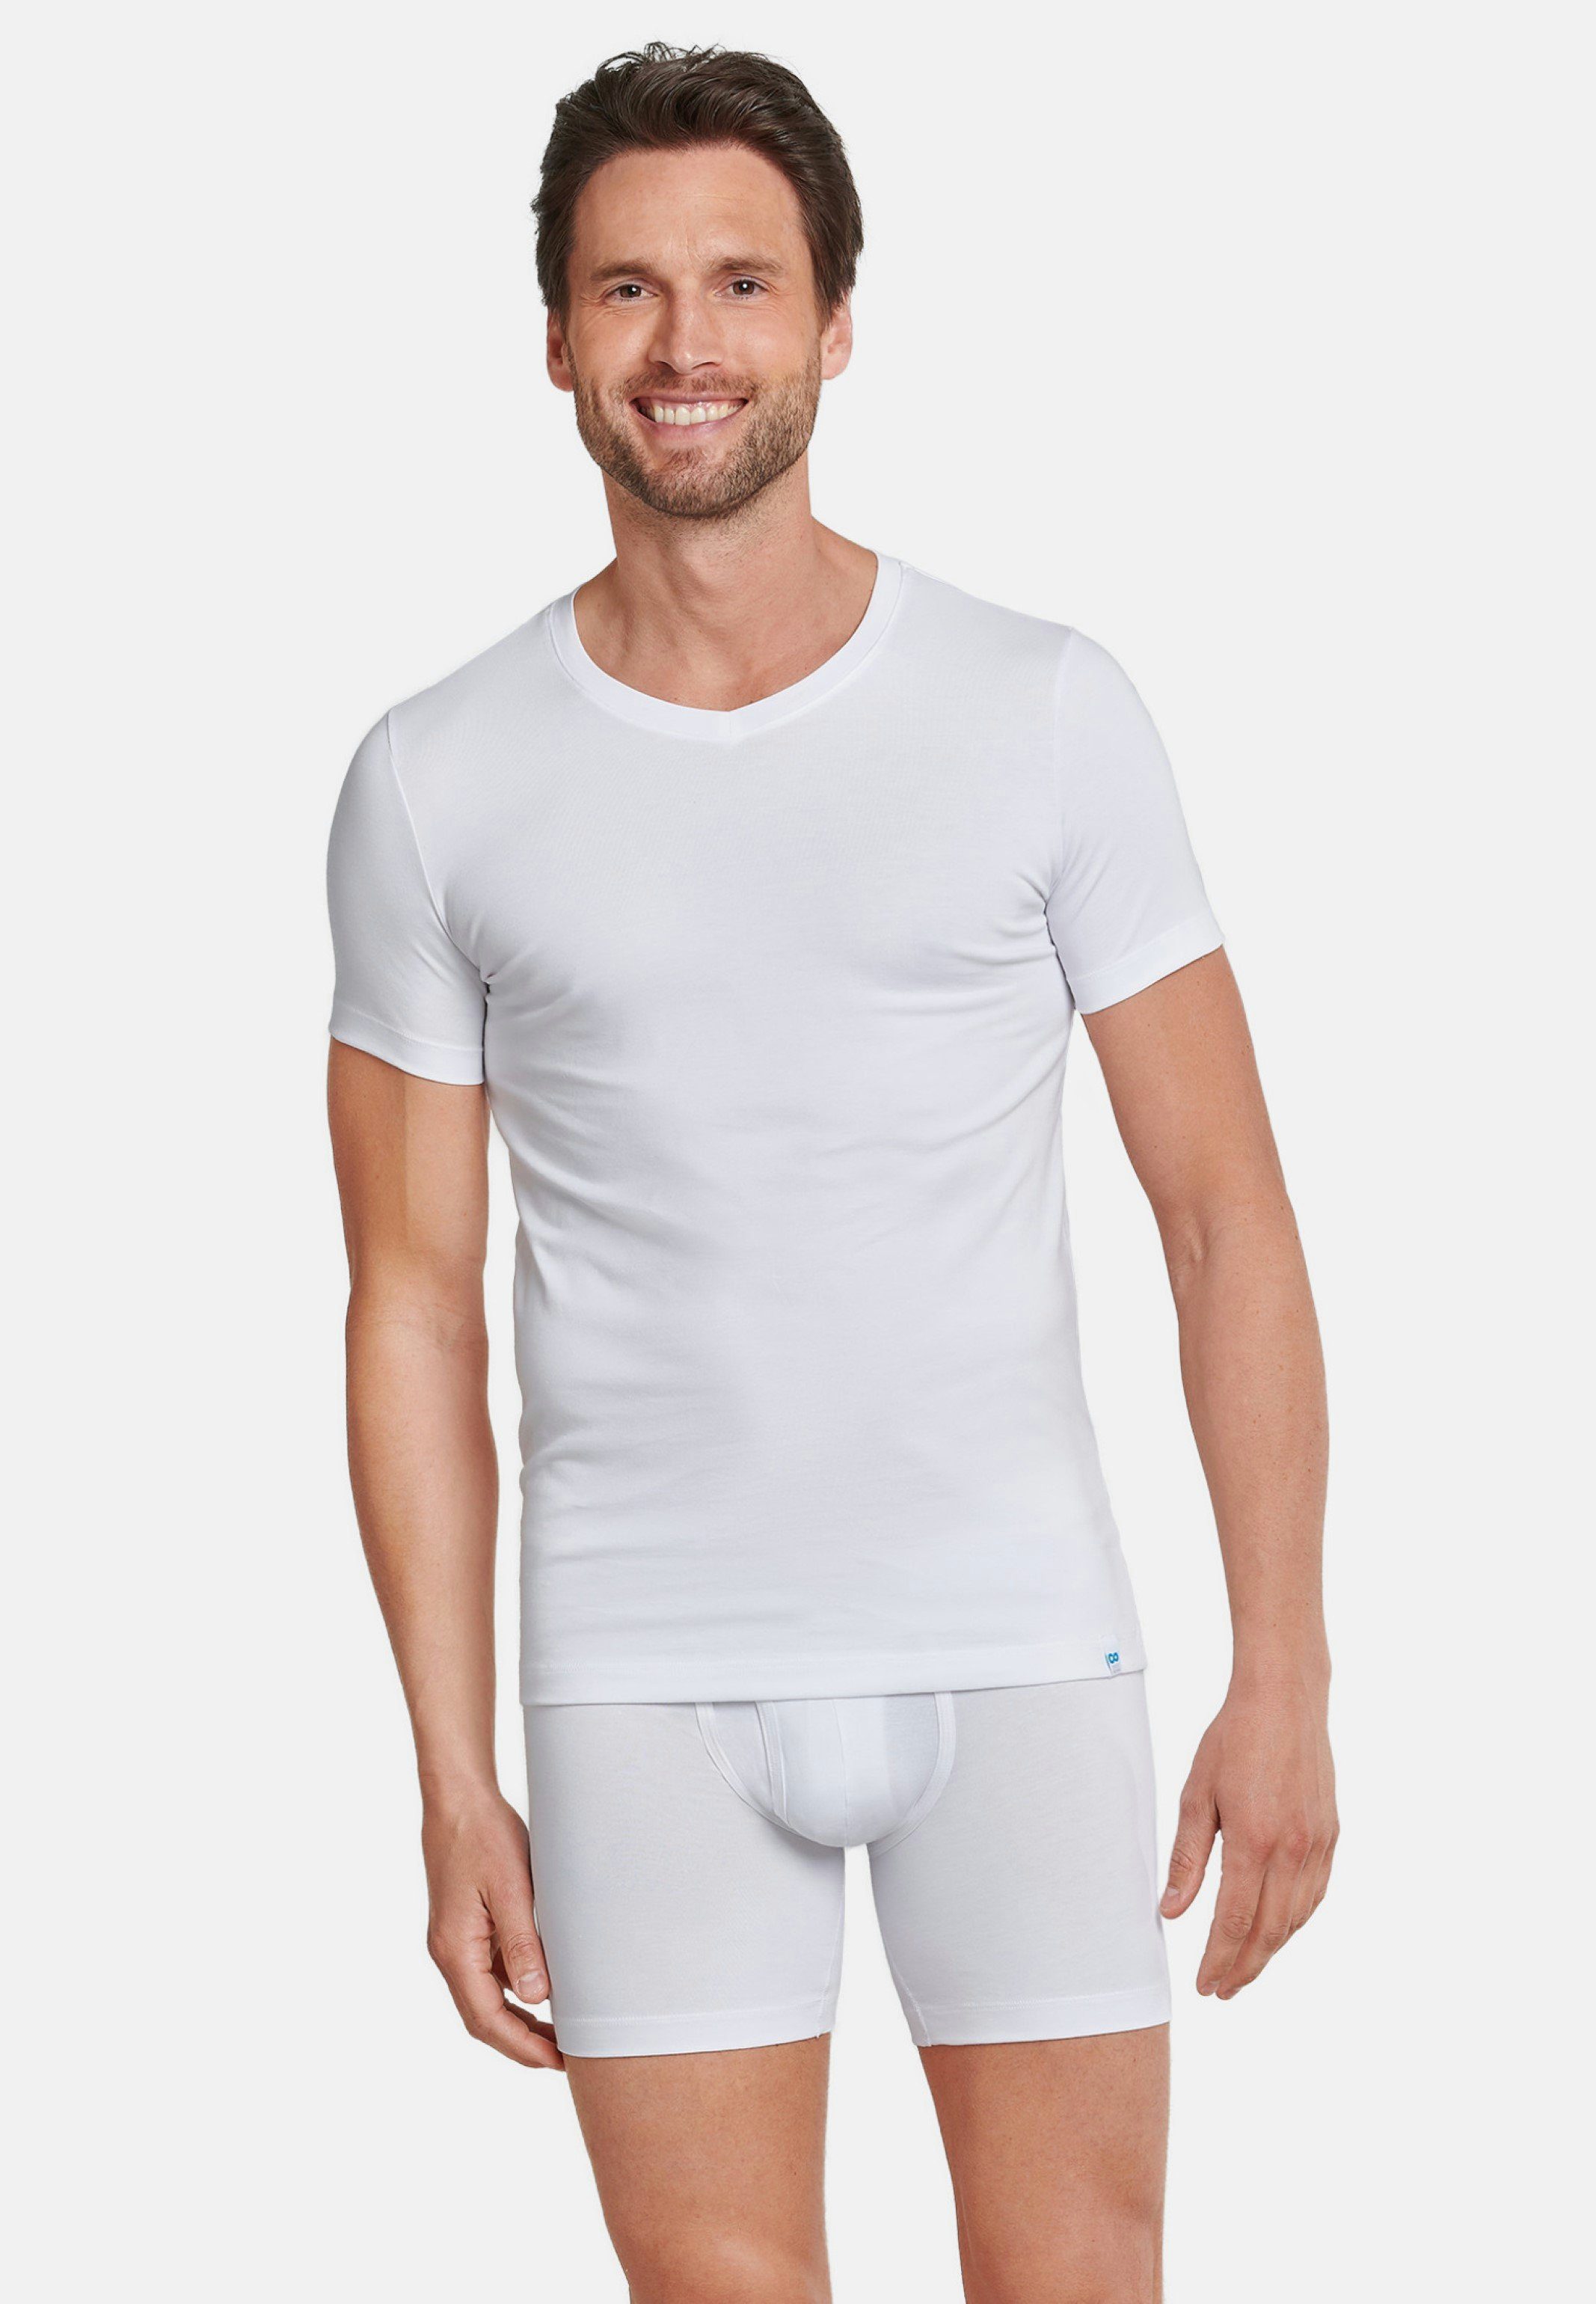 / - Unterhemd Baumwolle Kurzarm Cotton - Long Shirt Life Schiesser (1-St) Weiß Unterhemd